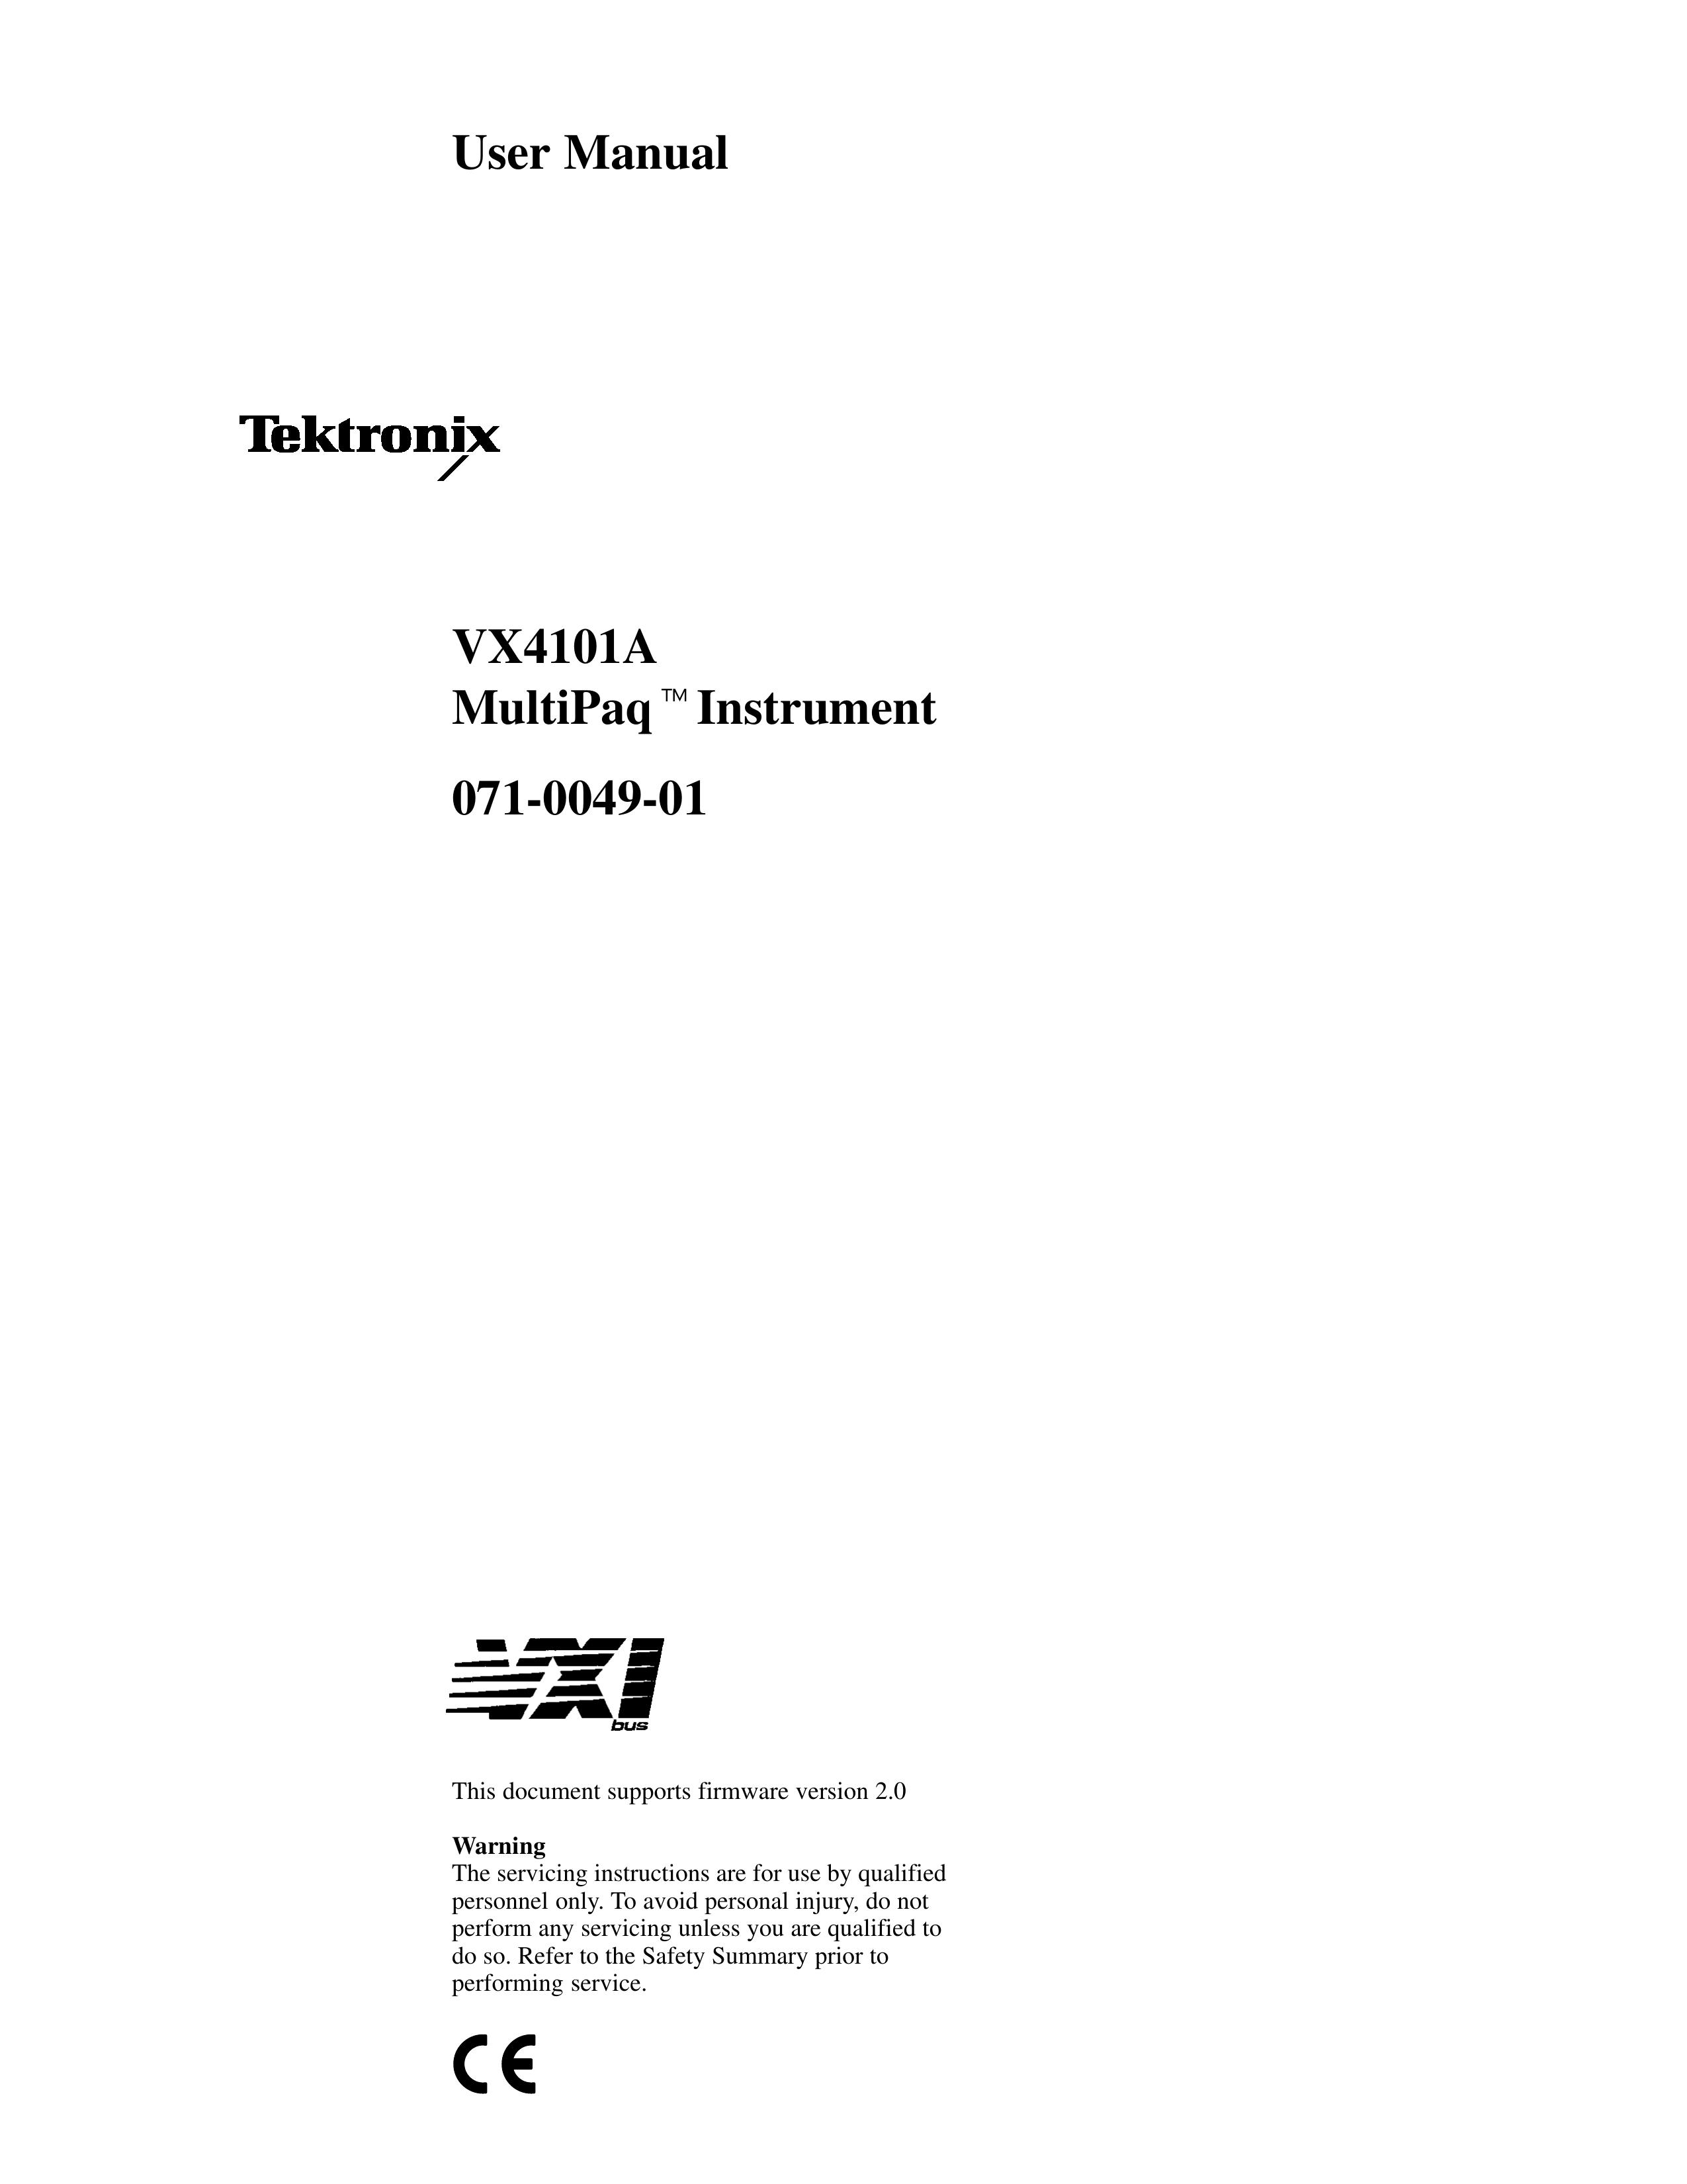 Tektronix VX4101A Drums User Manual